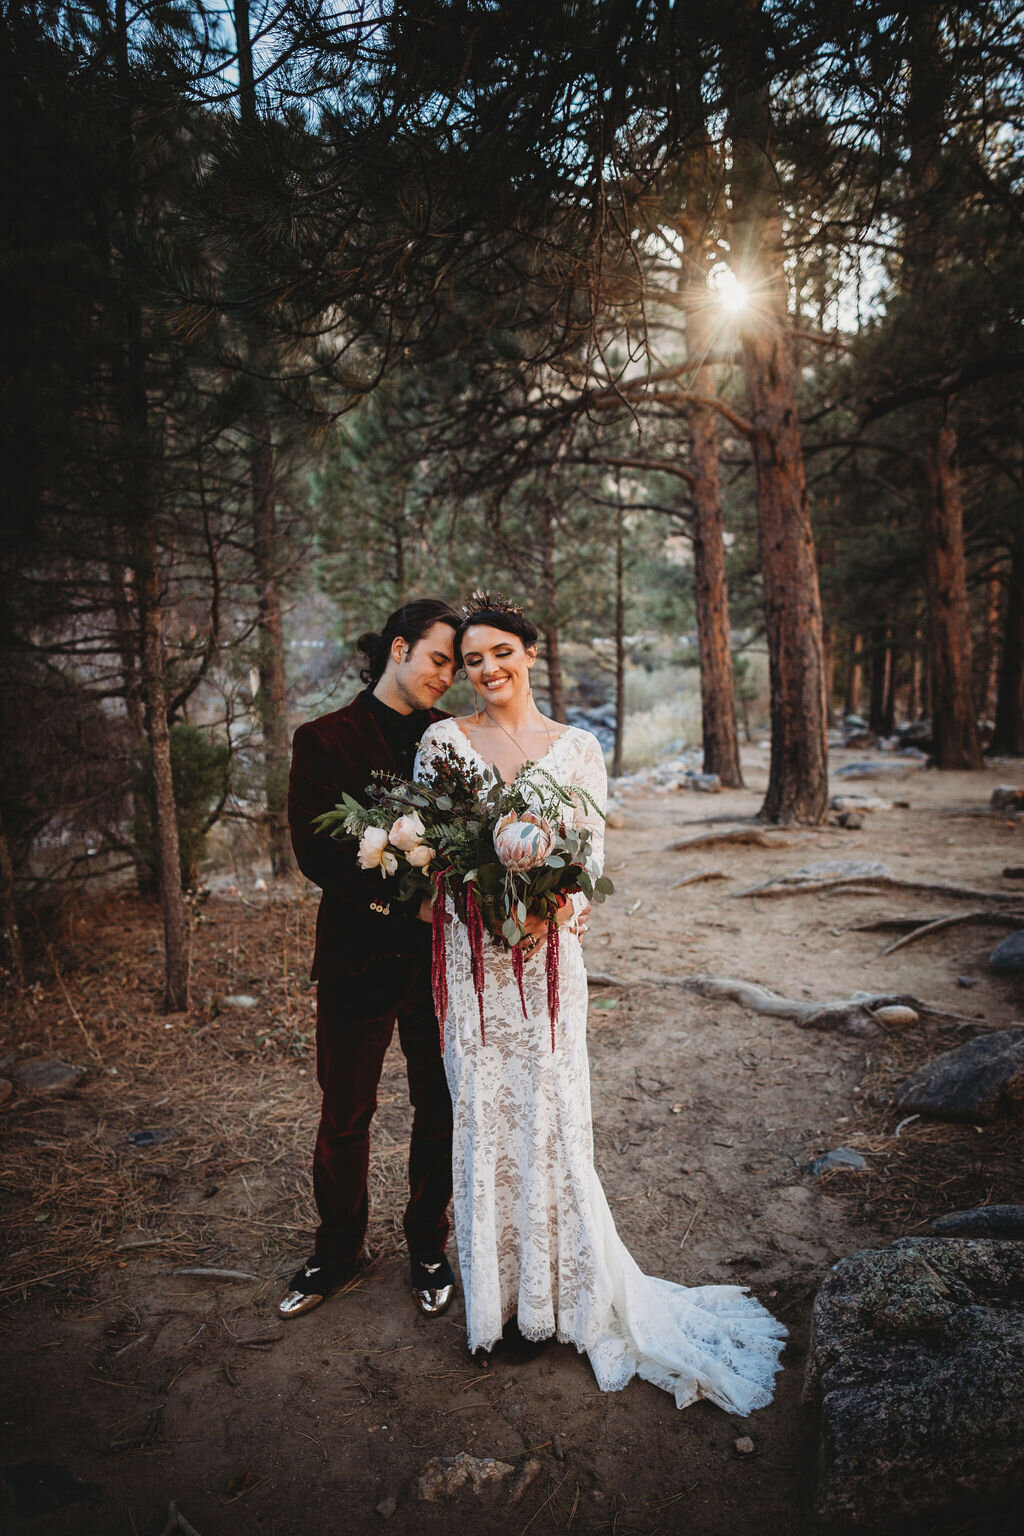 Wedding photographer northern colorado